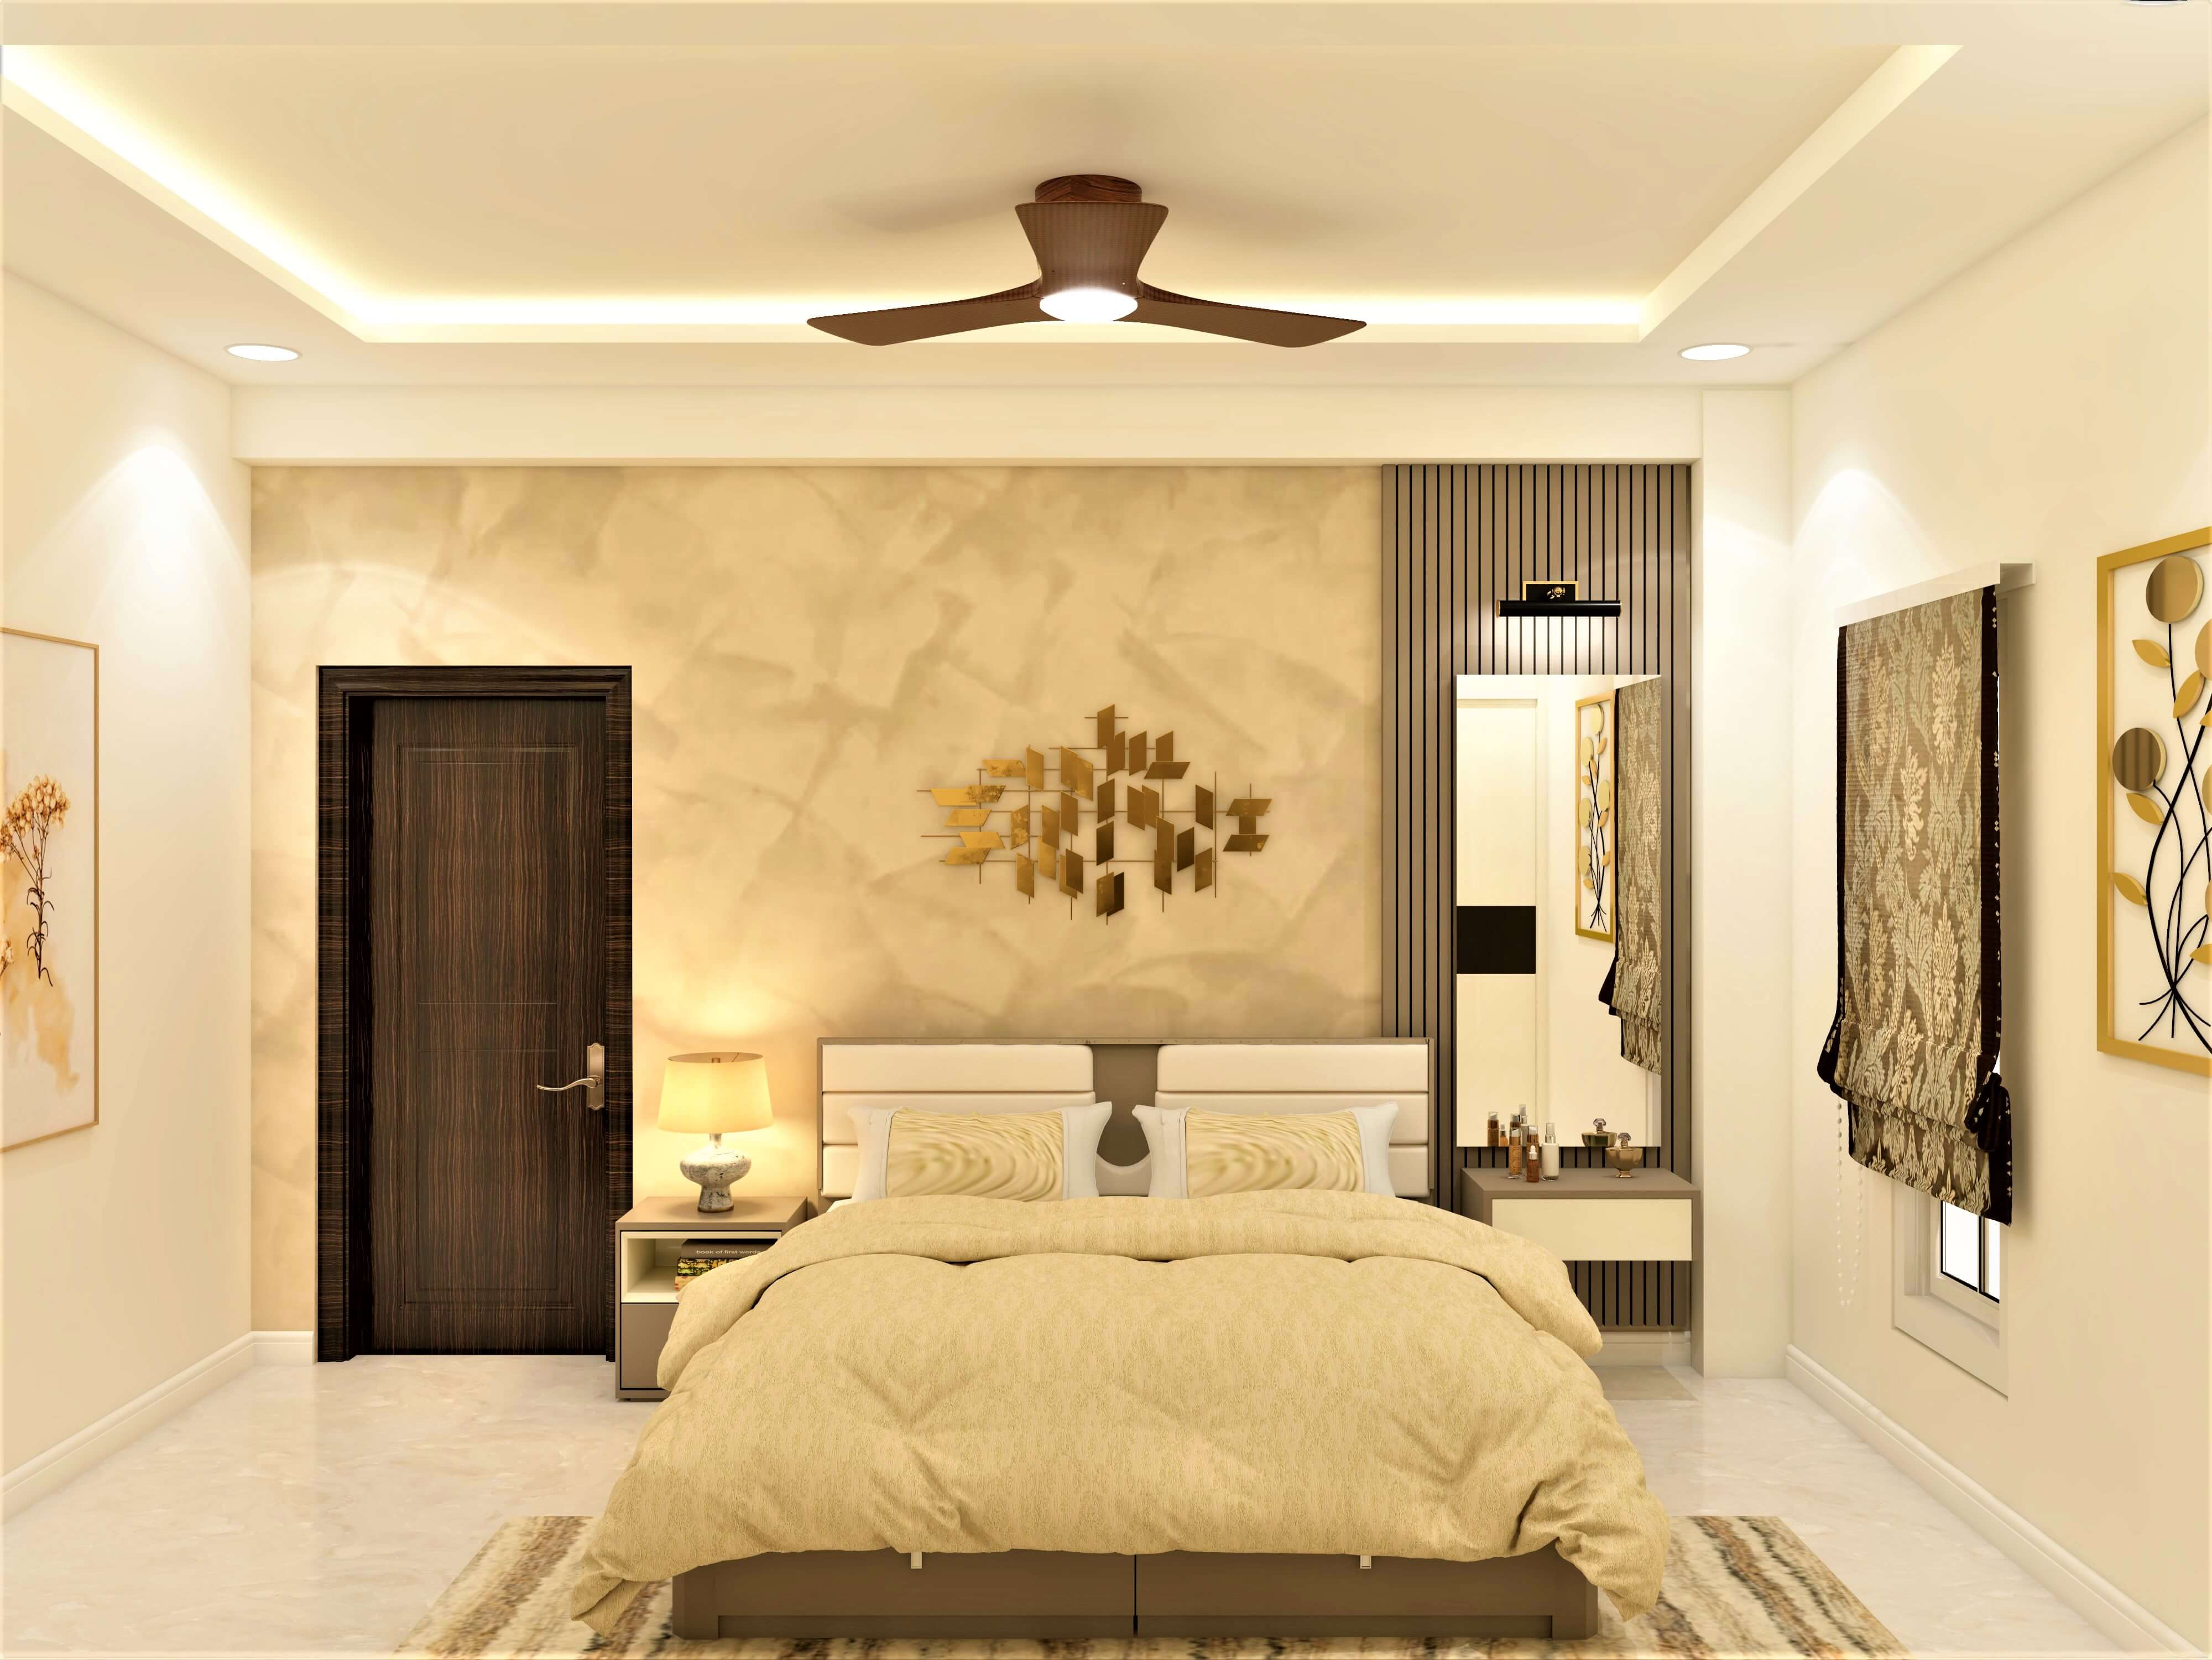 Modern master bedroom design with elegant decor ideas - Beautiful Homes